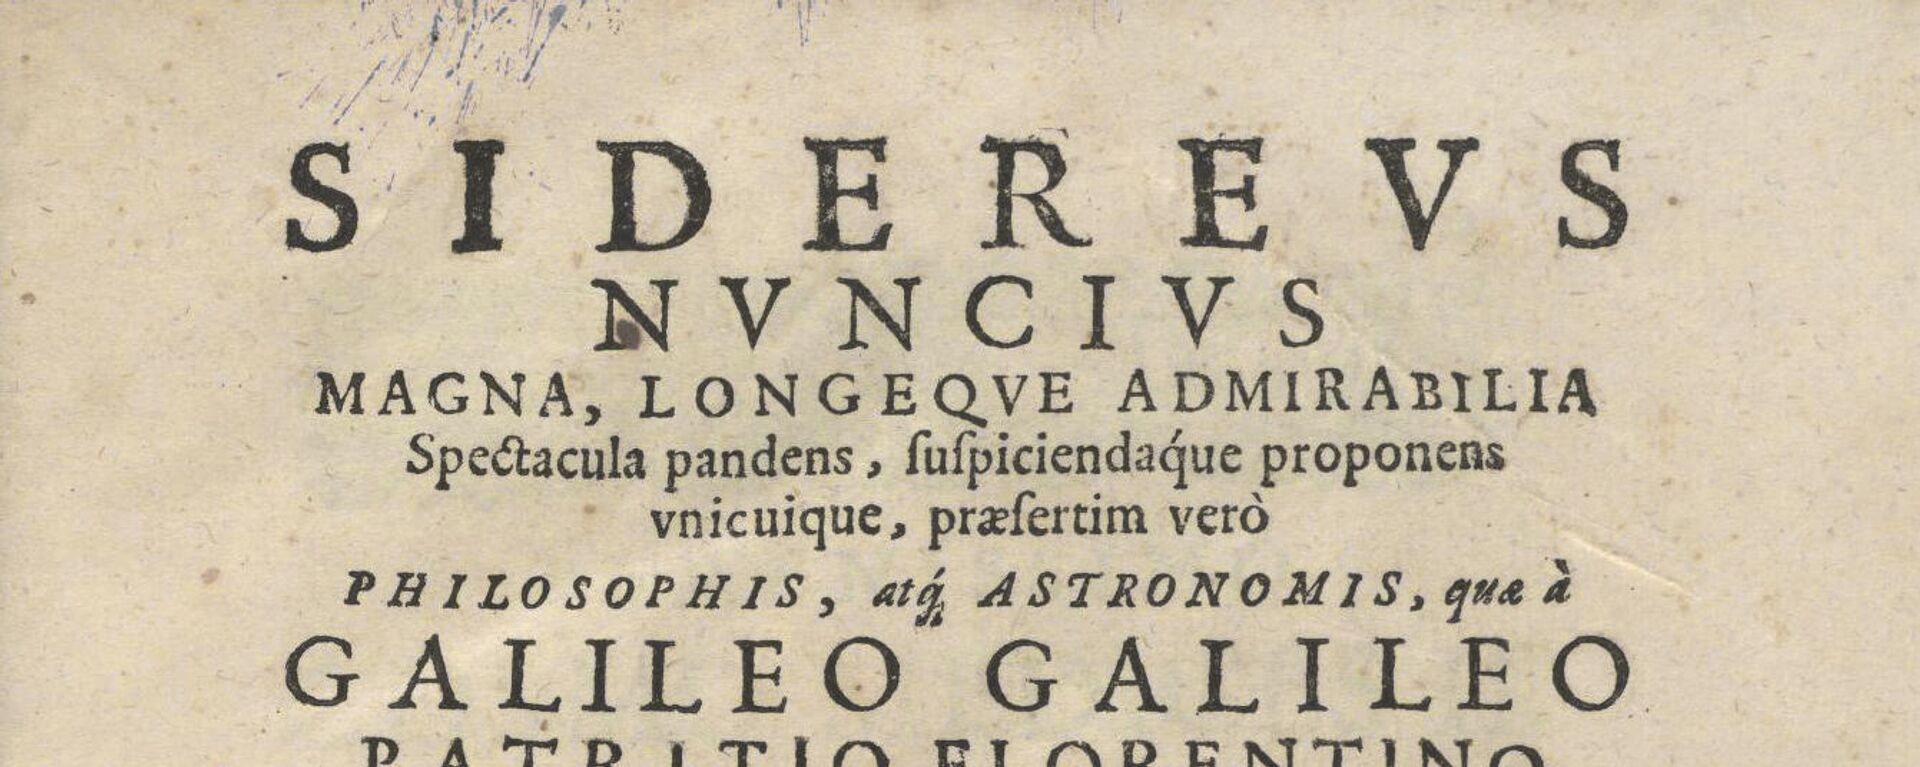 La primera página del tratado Sidereus Nuncius (Mensajero de las estrellas), escrito por Galileo Galilei - Sputnik Mundo, 1920, 14.03.2021